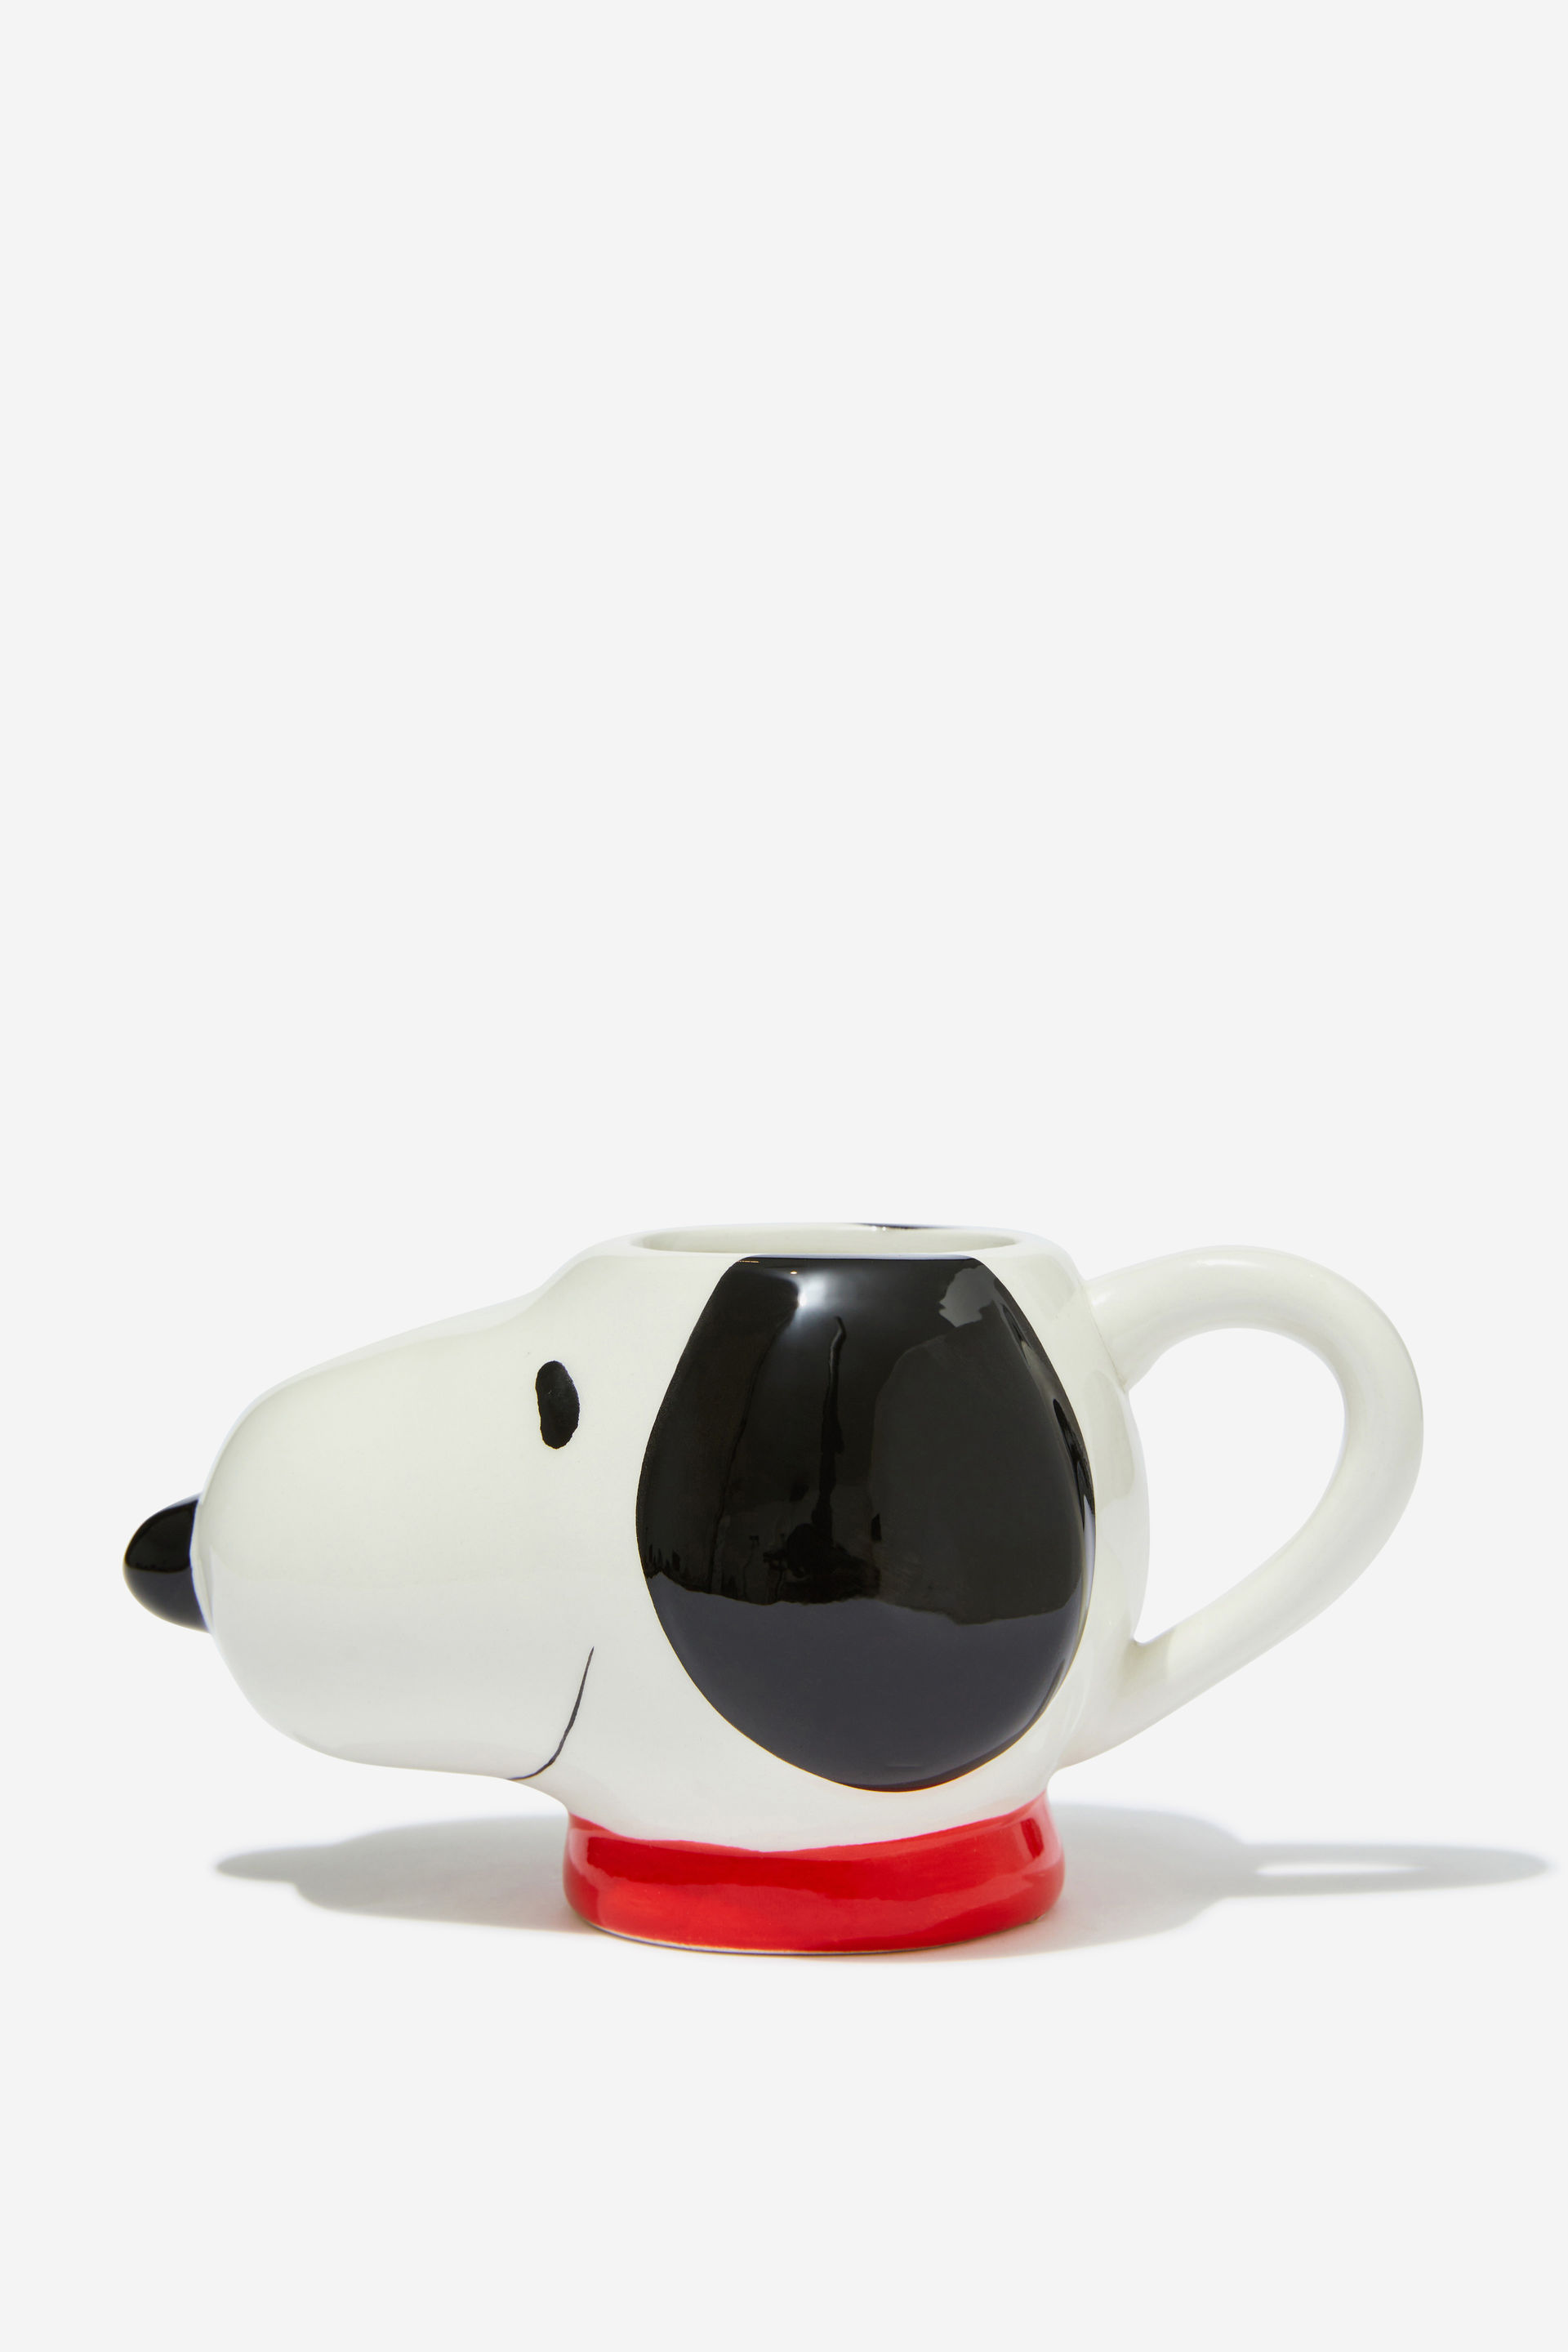 Typo - Snoopy Shaped Mug - Lcn pea snoopy head